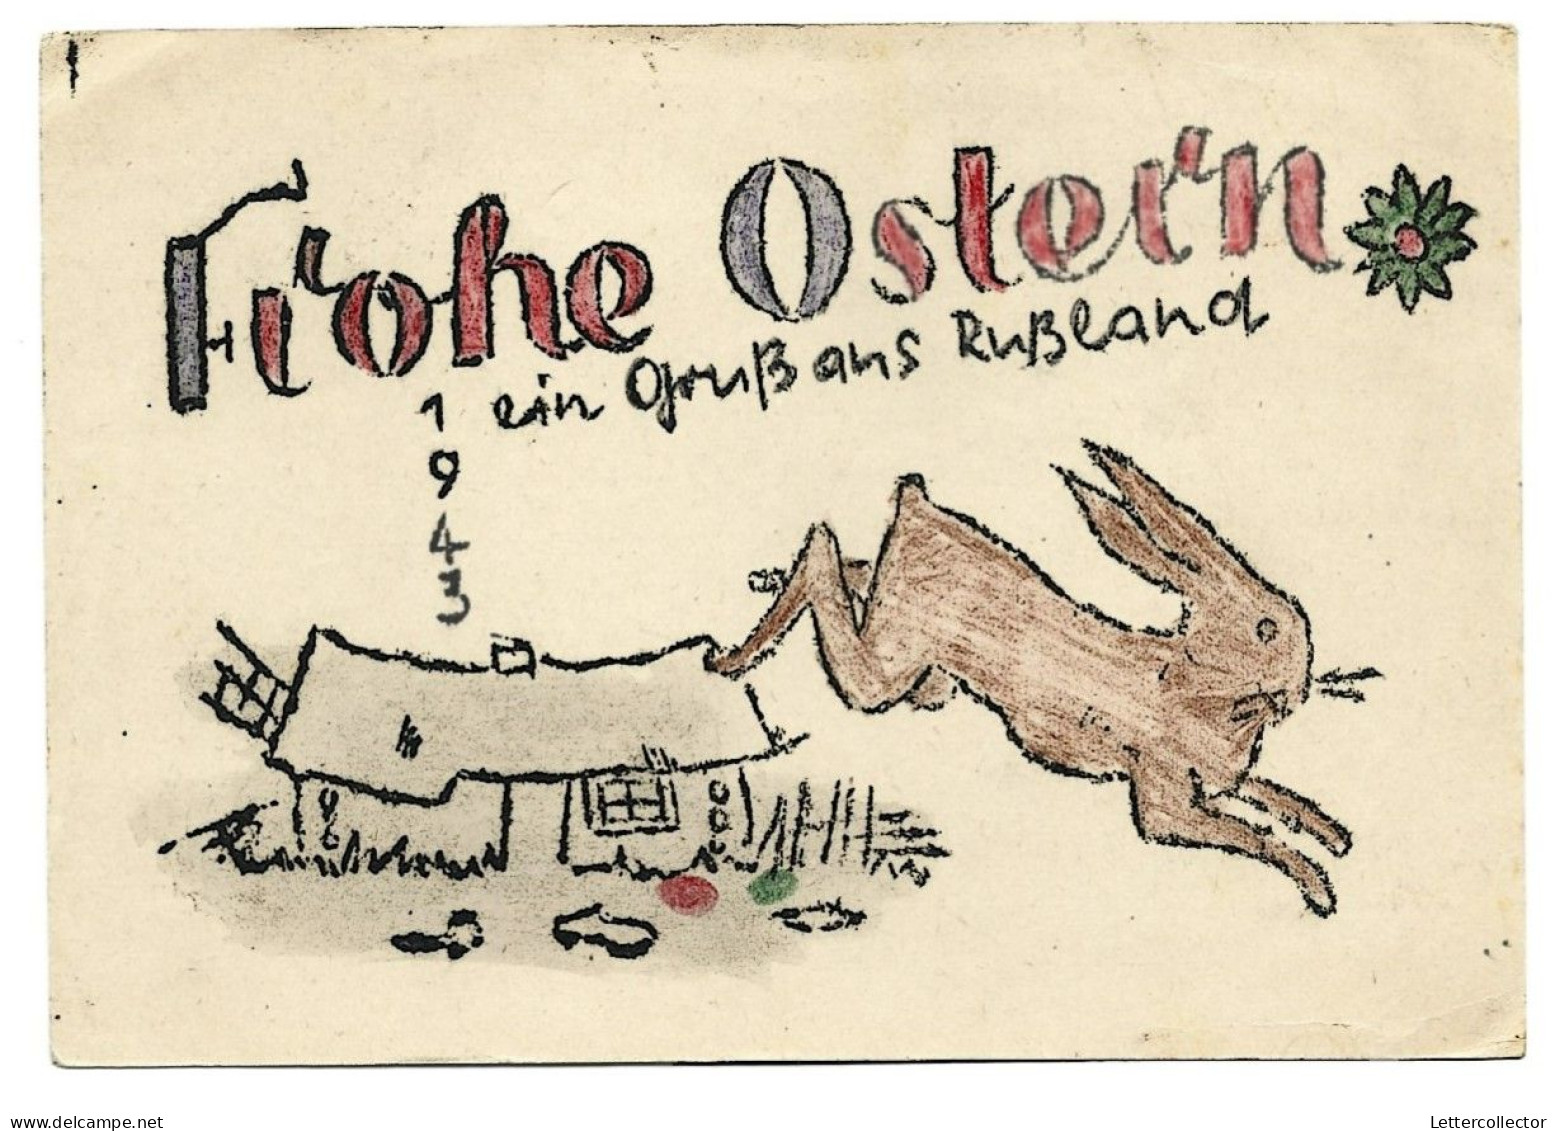 Feldpost Vordruckkarte Ostern 1942 Orel Handgemalt - Feldpost World War II